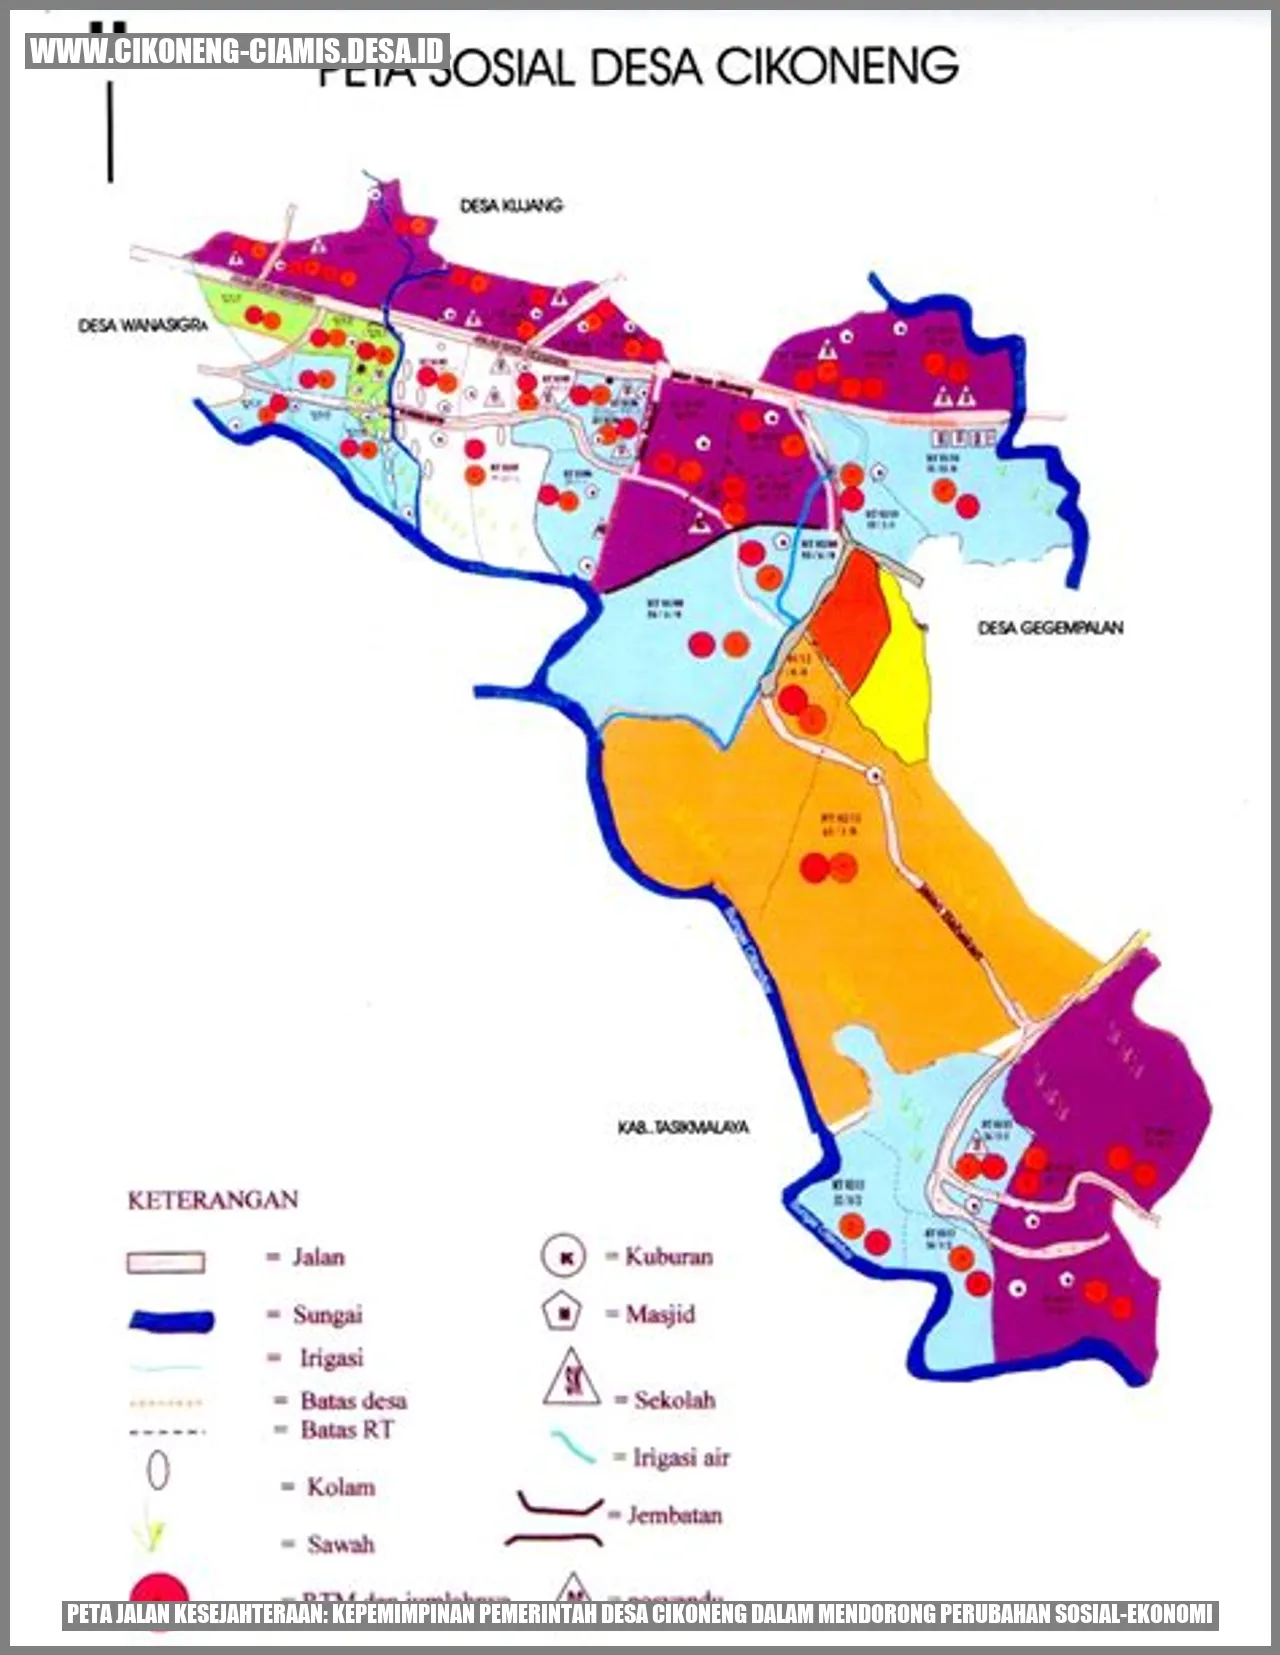 Peta Jalan Kesejahteraan: Kepemimpinan Pemerintah Desa Cikoneng dalam Mendorong Perubahan Sosial-Ekonomi